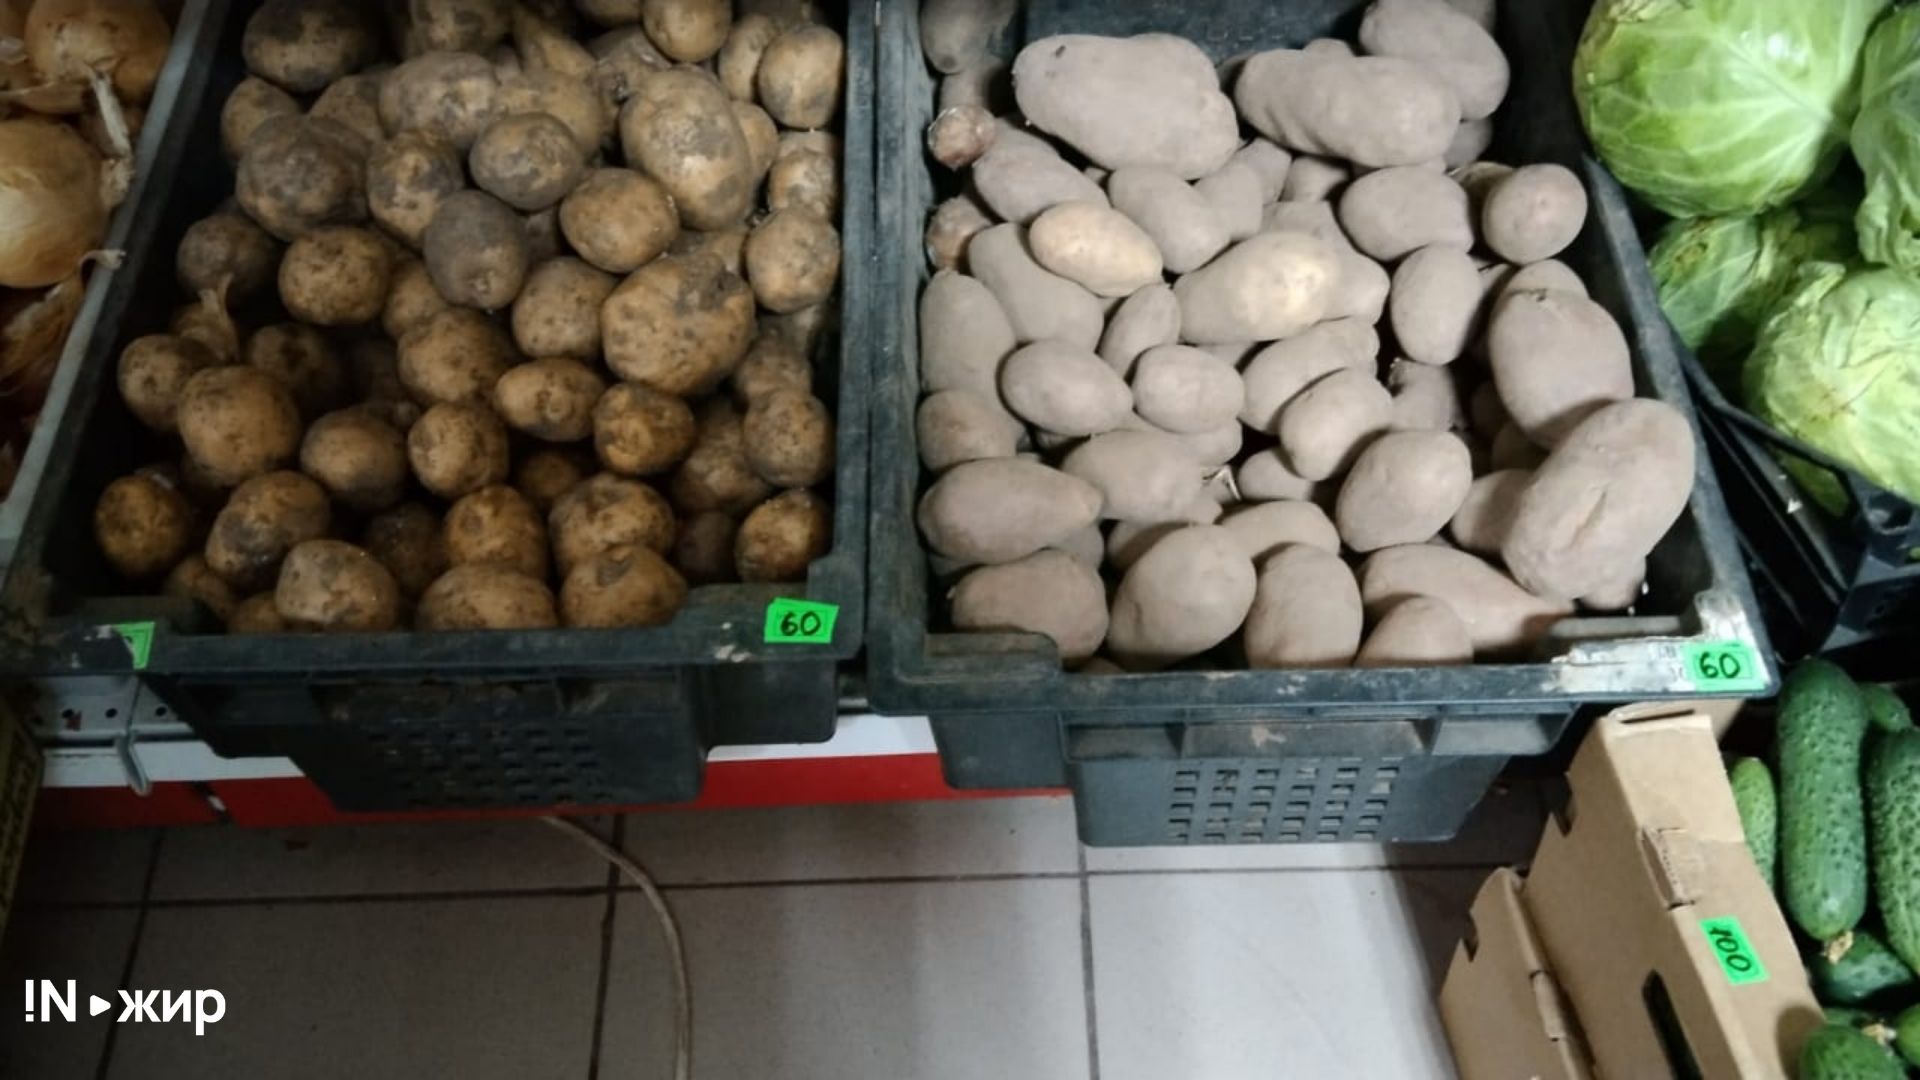 Картофель по 60 р. за кг. Фото: INжир media